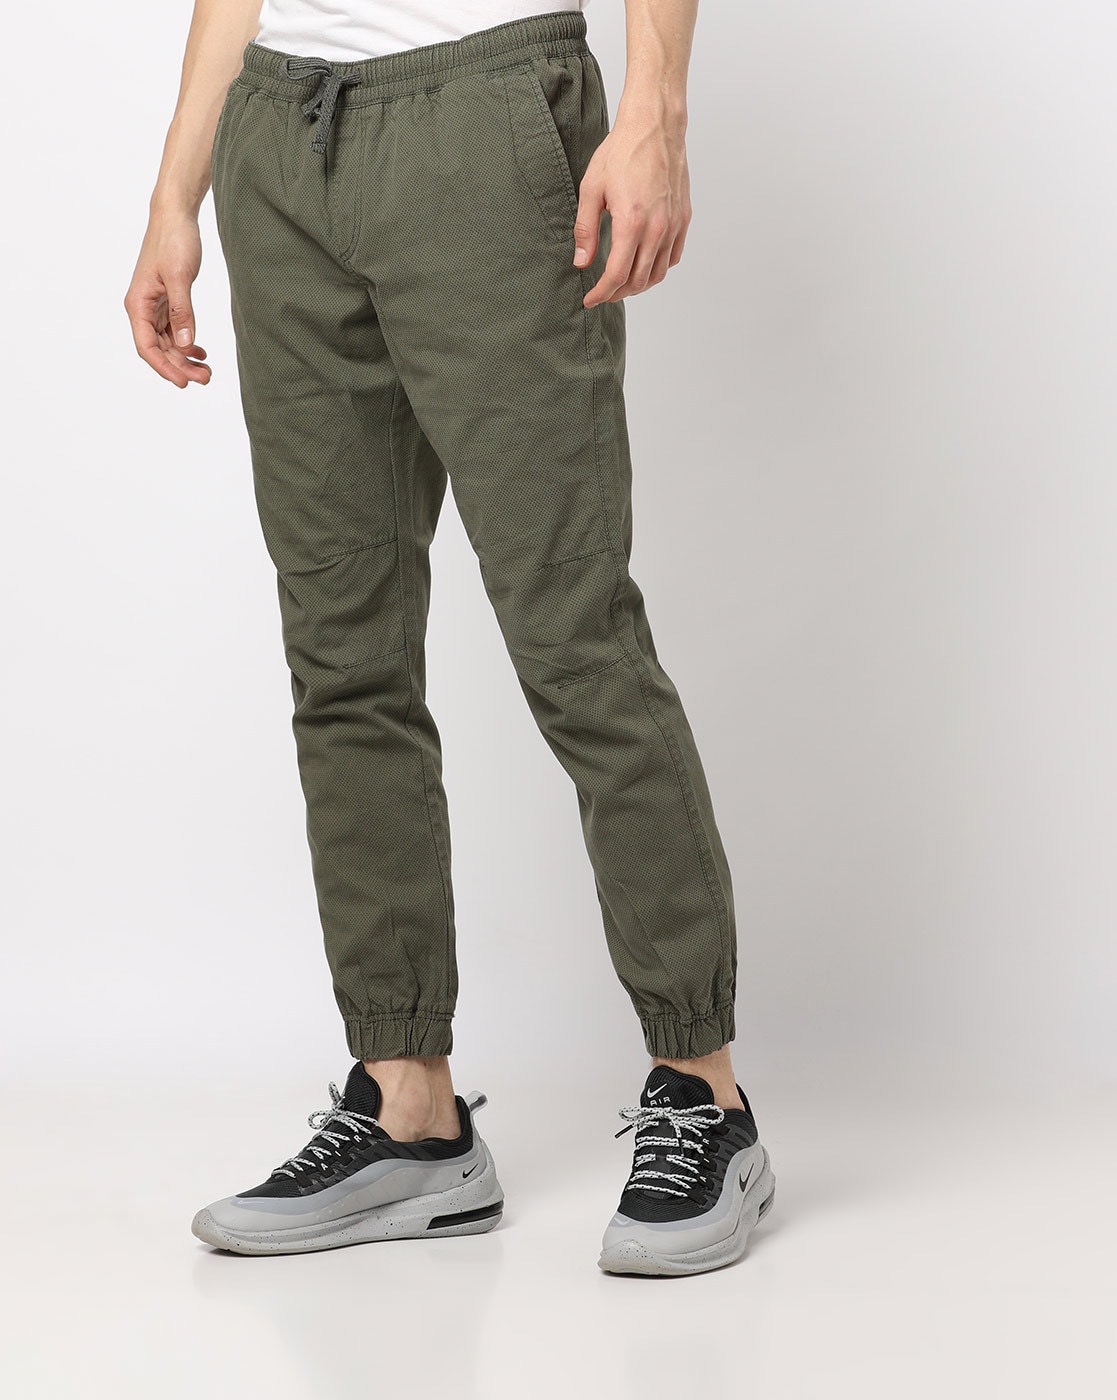 olive green track pants